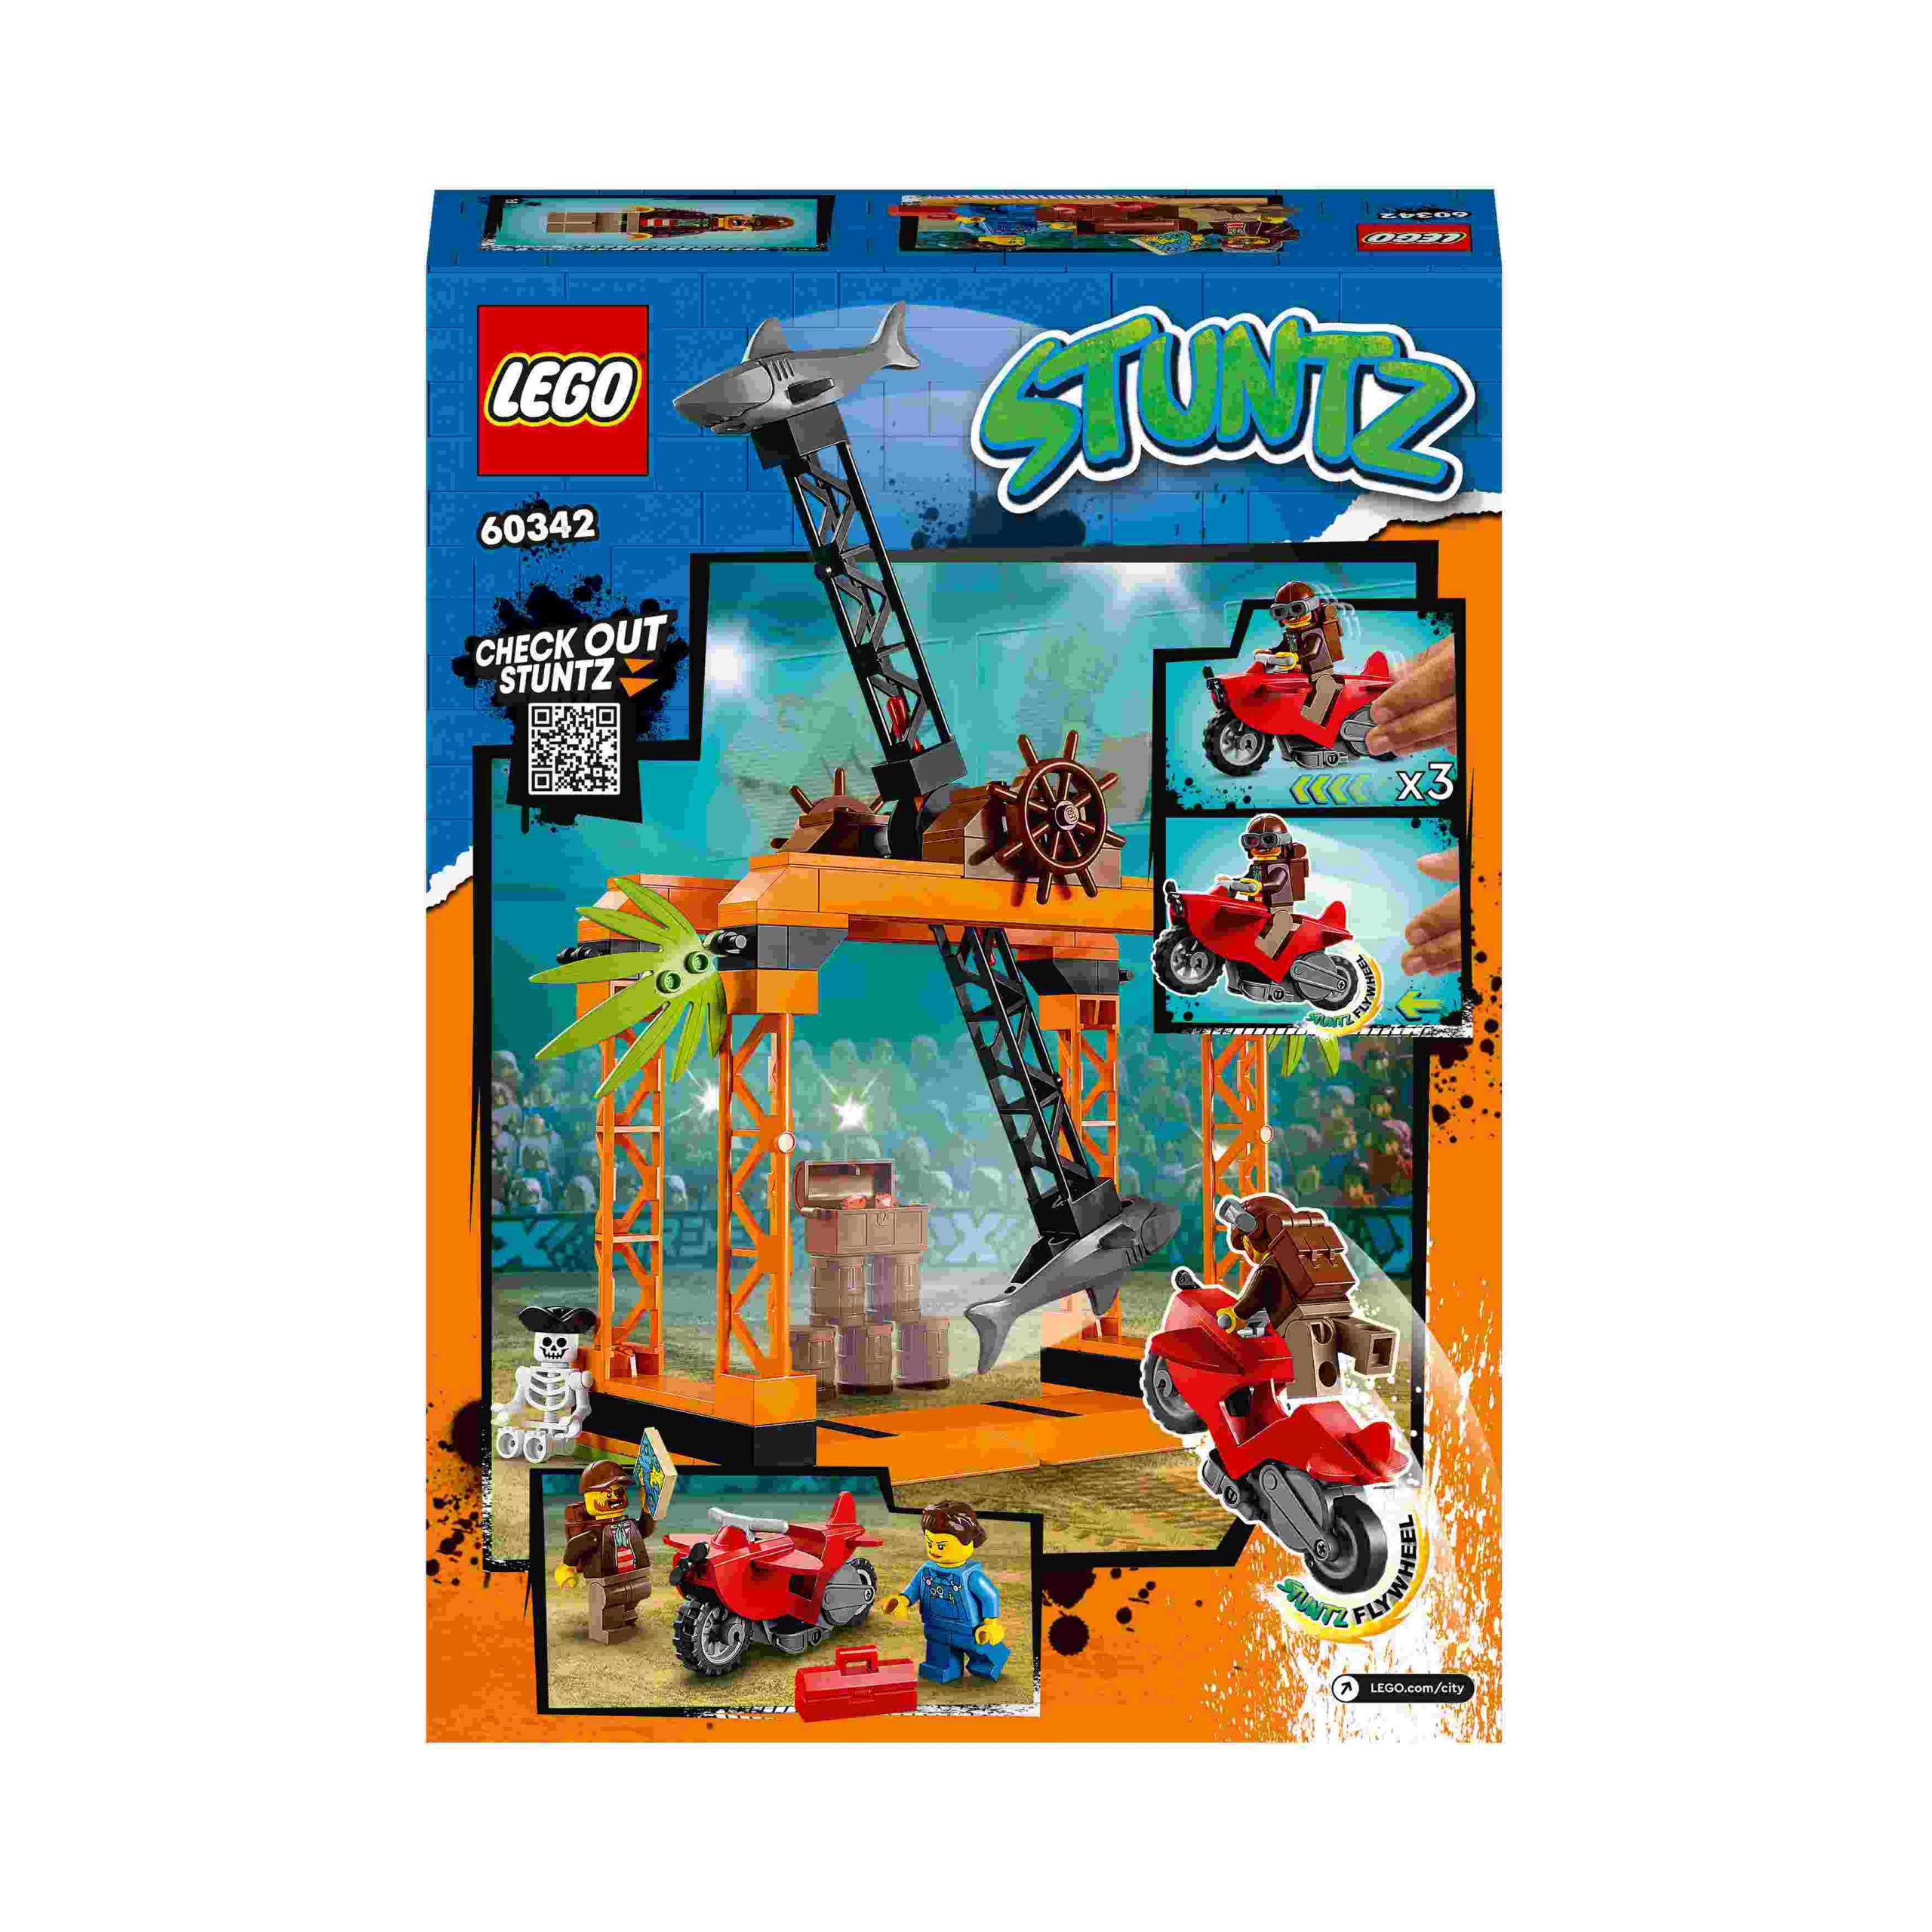 LEGO City Stuntz Ακροβατική Δοκιμασία Επίθεση Καρχαριών 60342 - LEGO, LEGO City, LEGO City Stuntz